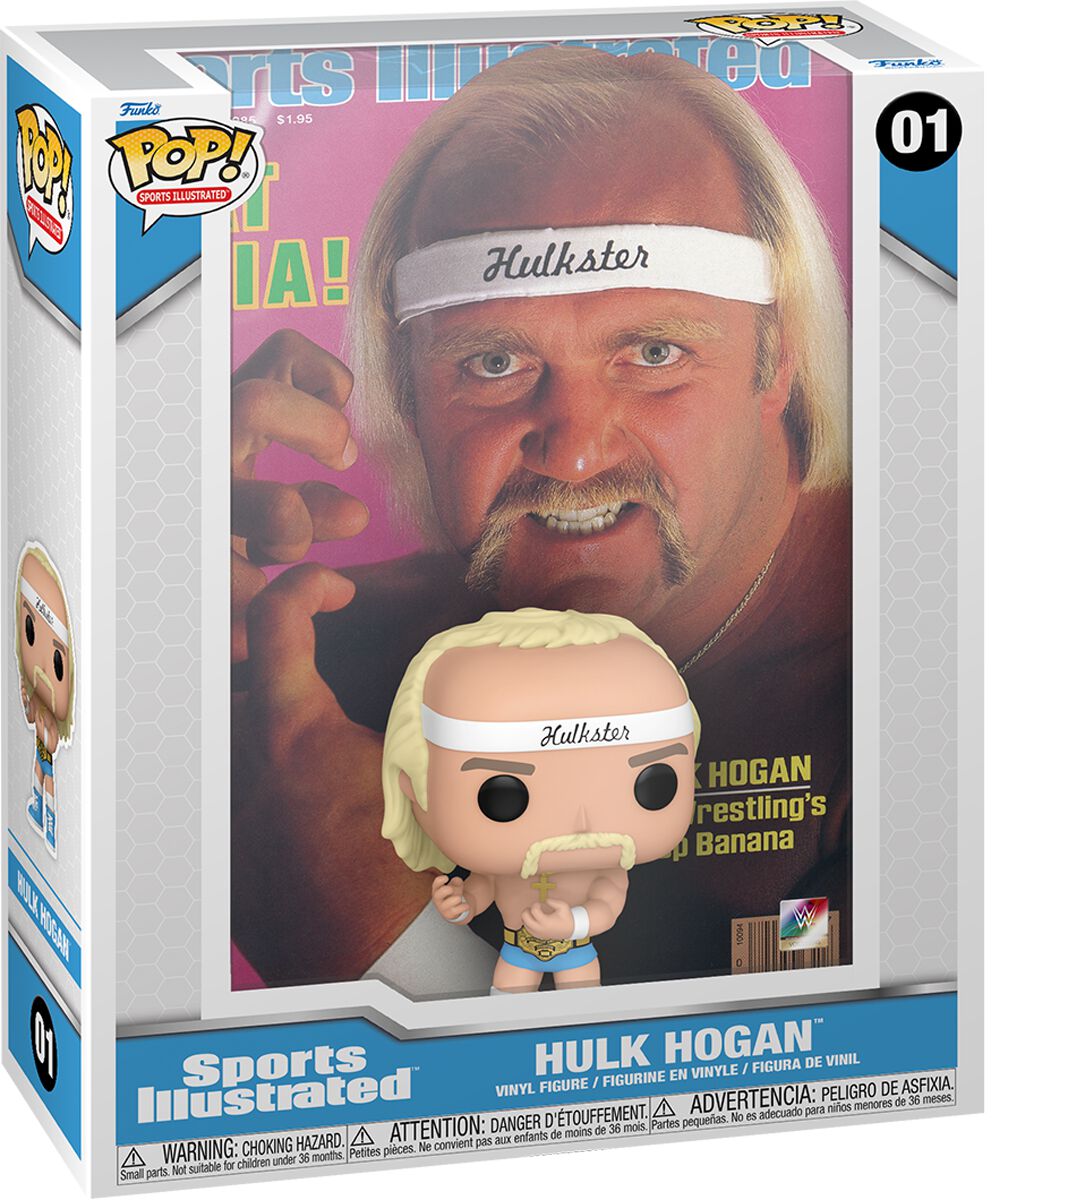 WWE - Hulk Hogan (Pop! Sports Illustrated) Vinyl Figur 01 - Funko Pop! Figur - Funko Shop Deutschland